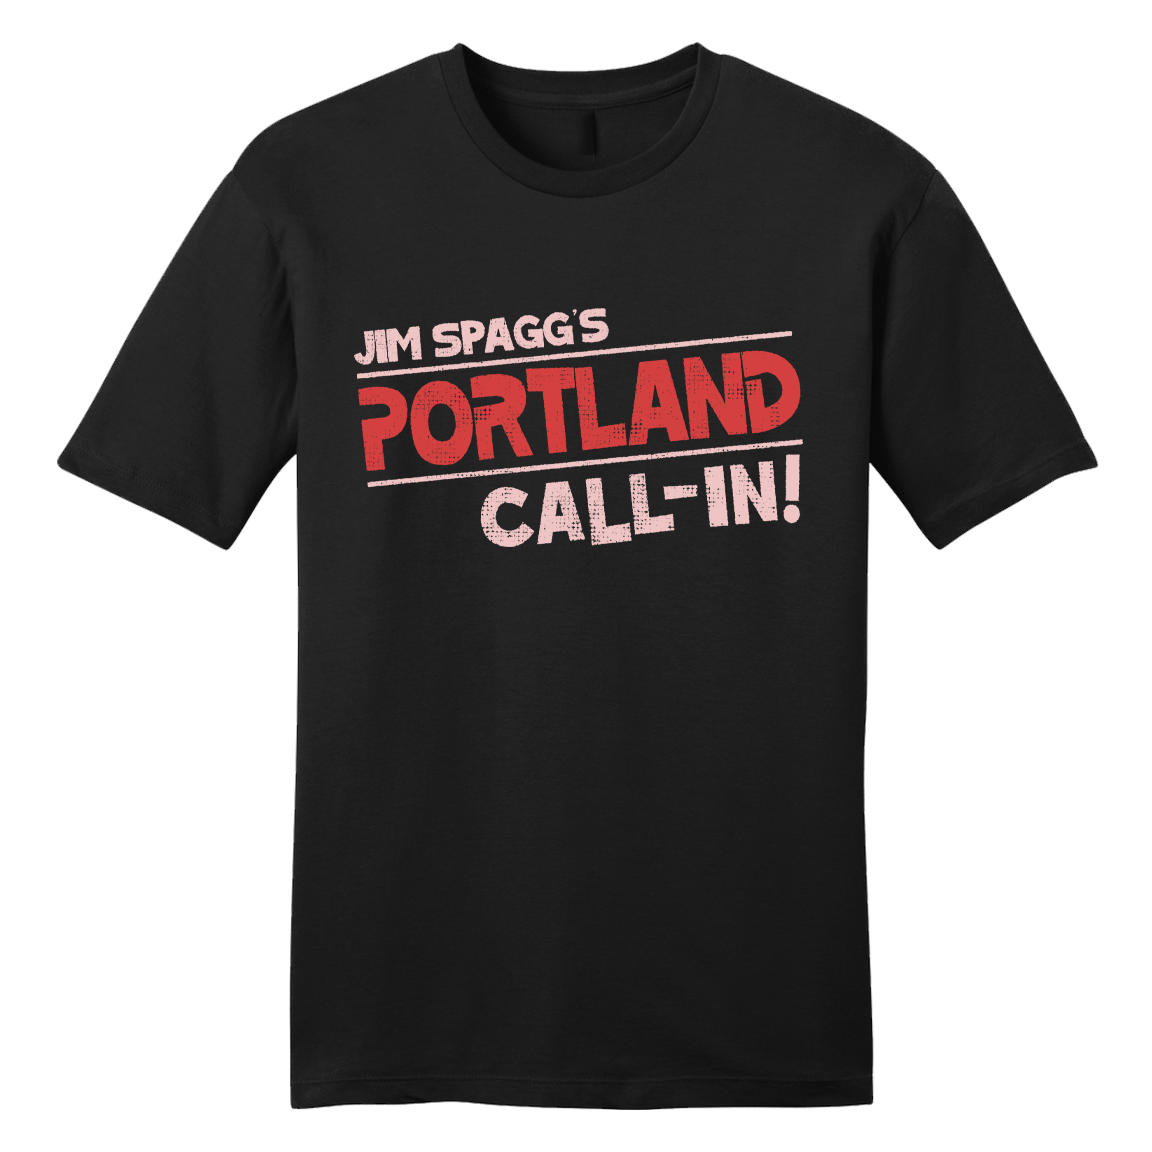 Jim Spagg's Portland Call-In